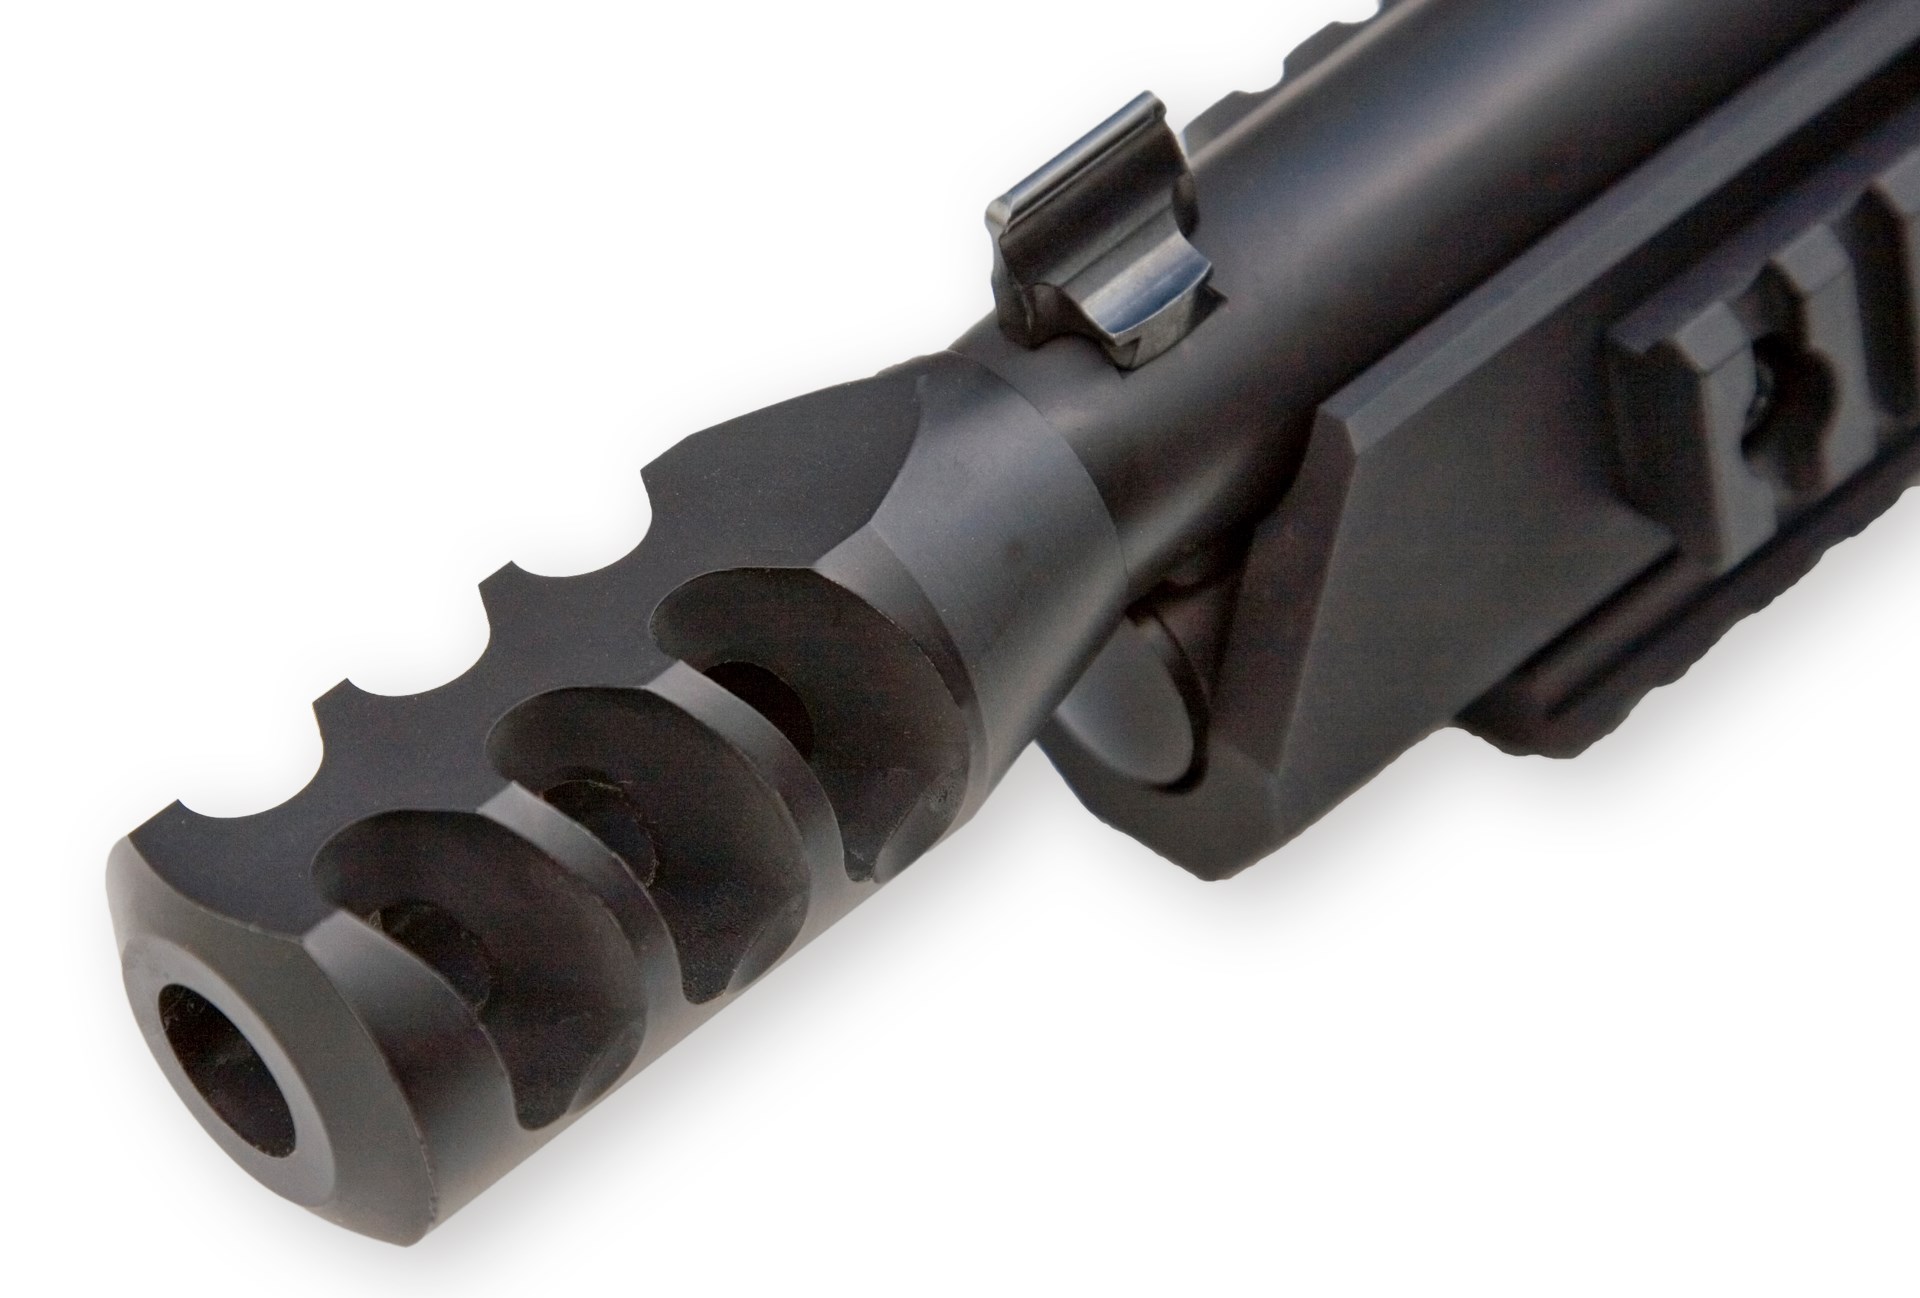 Big Horn Armory Black Thunder rifle parts barrel muzzle brake sight closeup metal